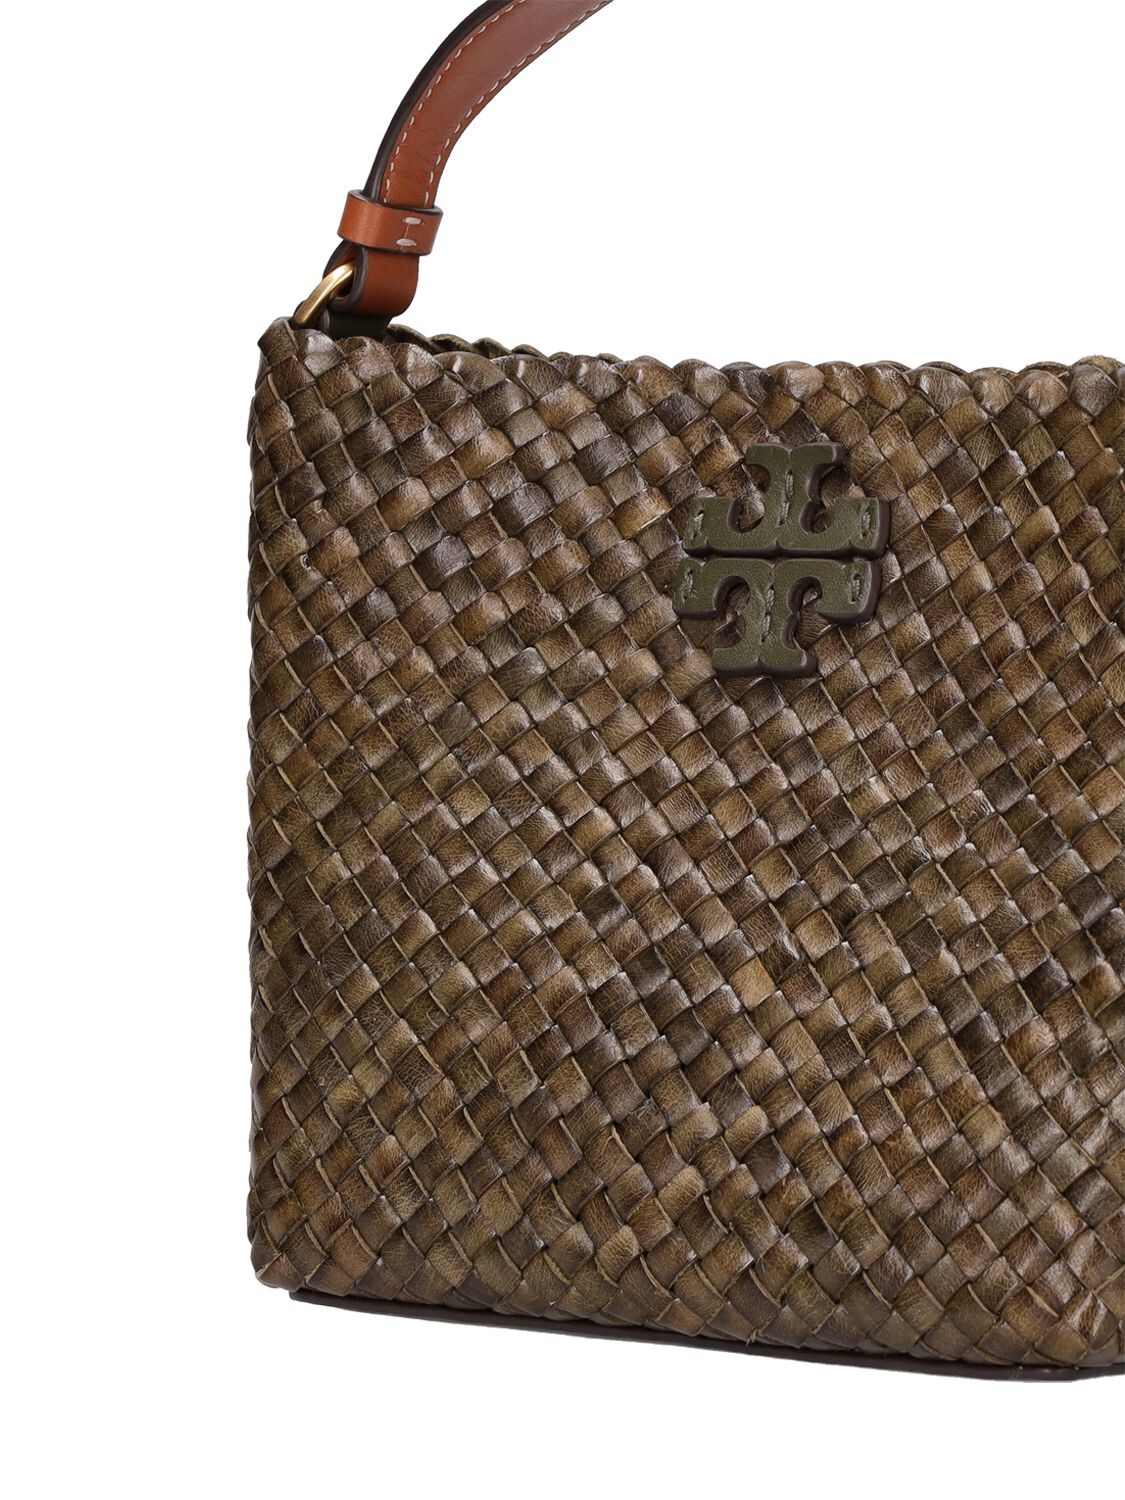 Tory Burch Mcgraw Dragon Woven Small Bucket Bag in Brown